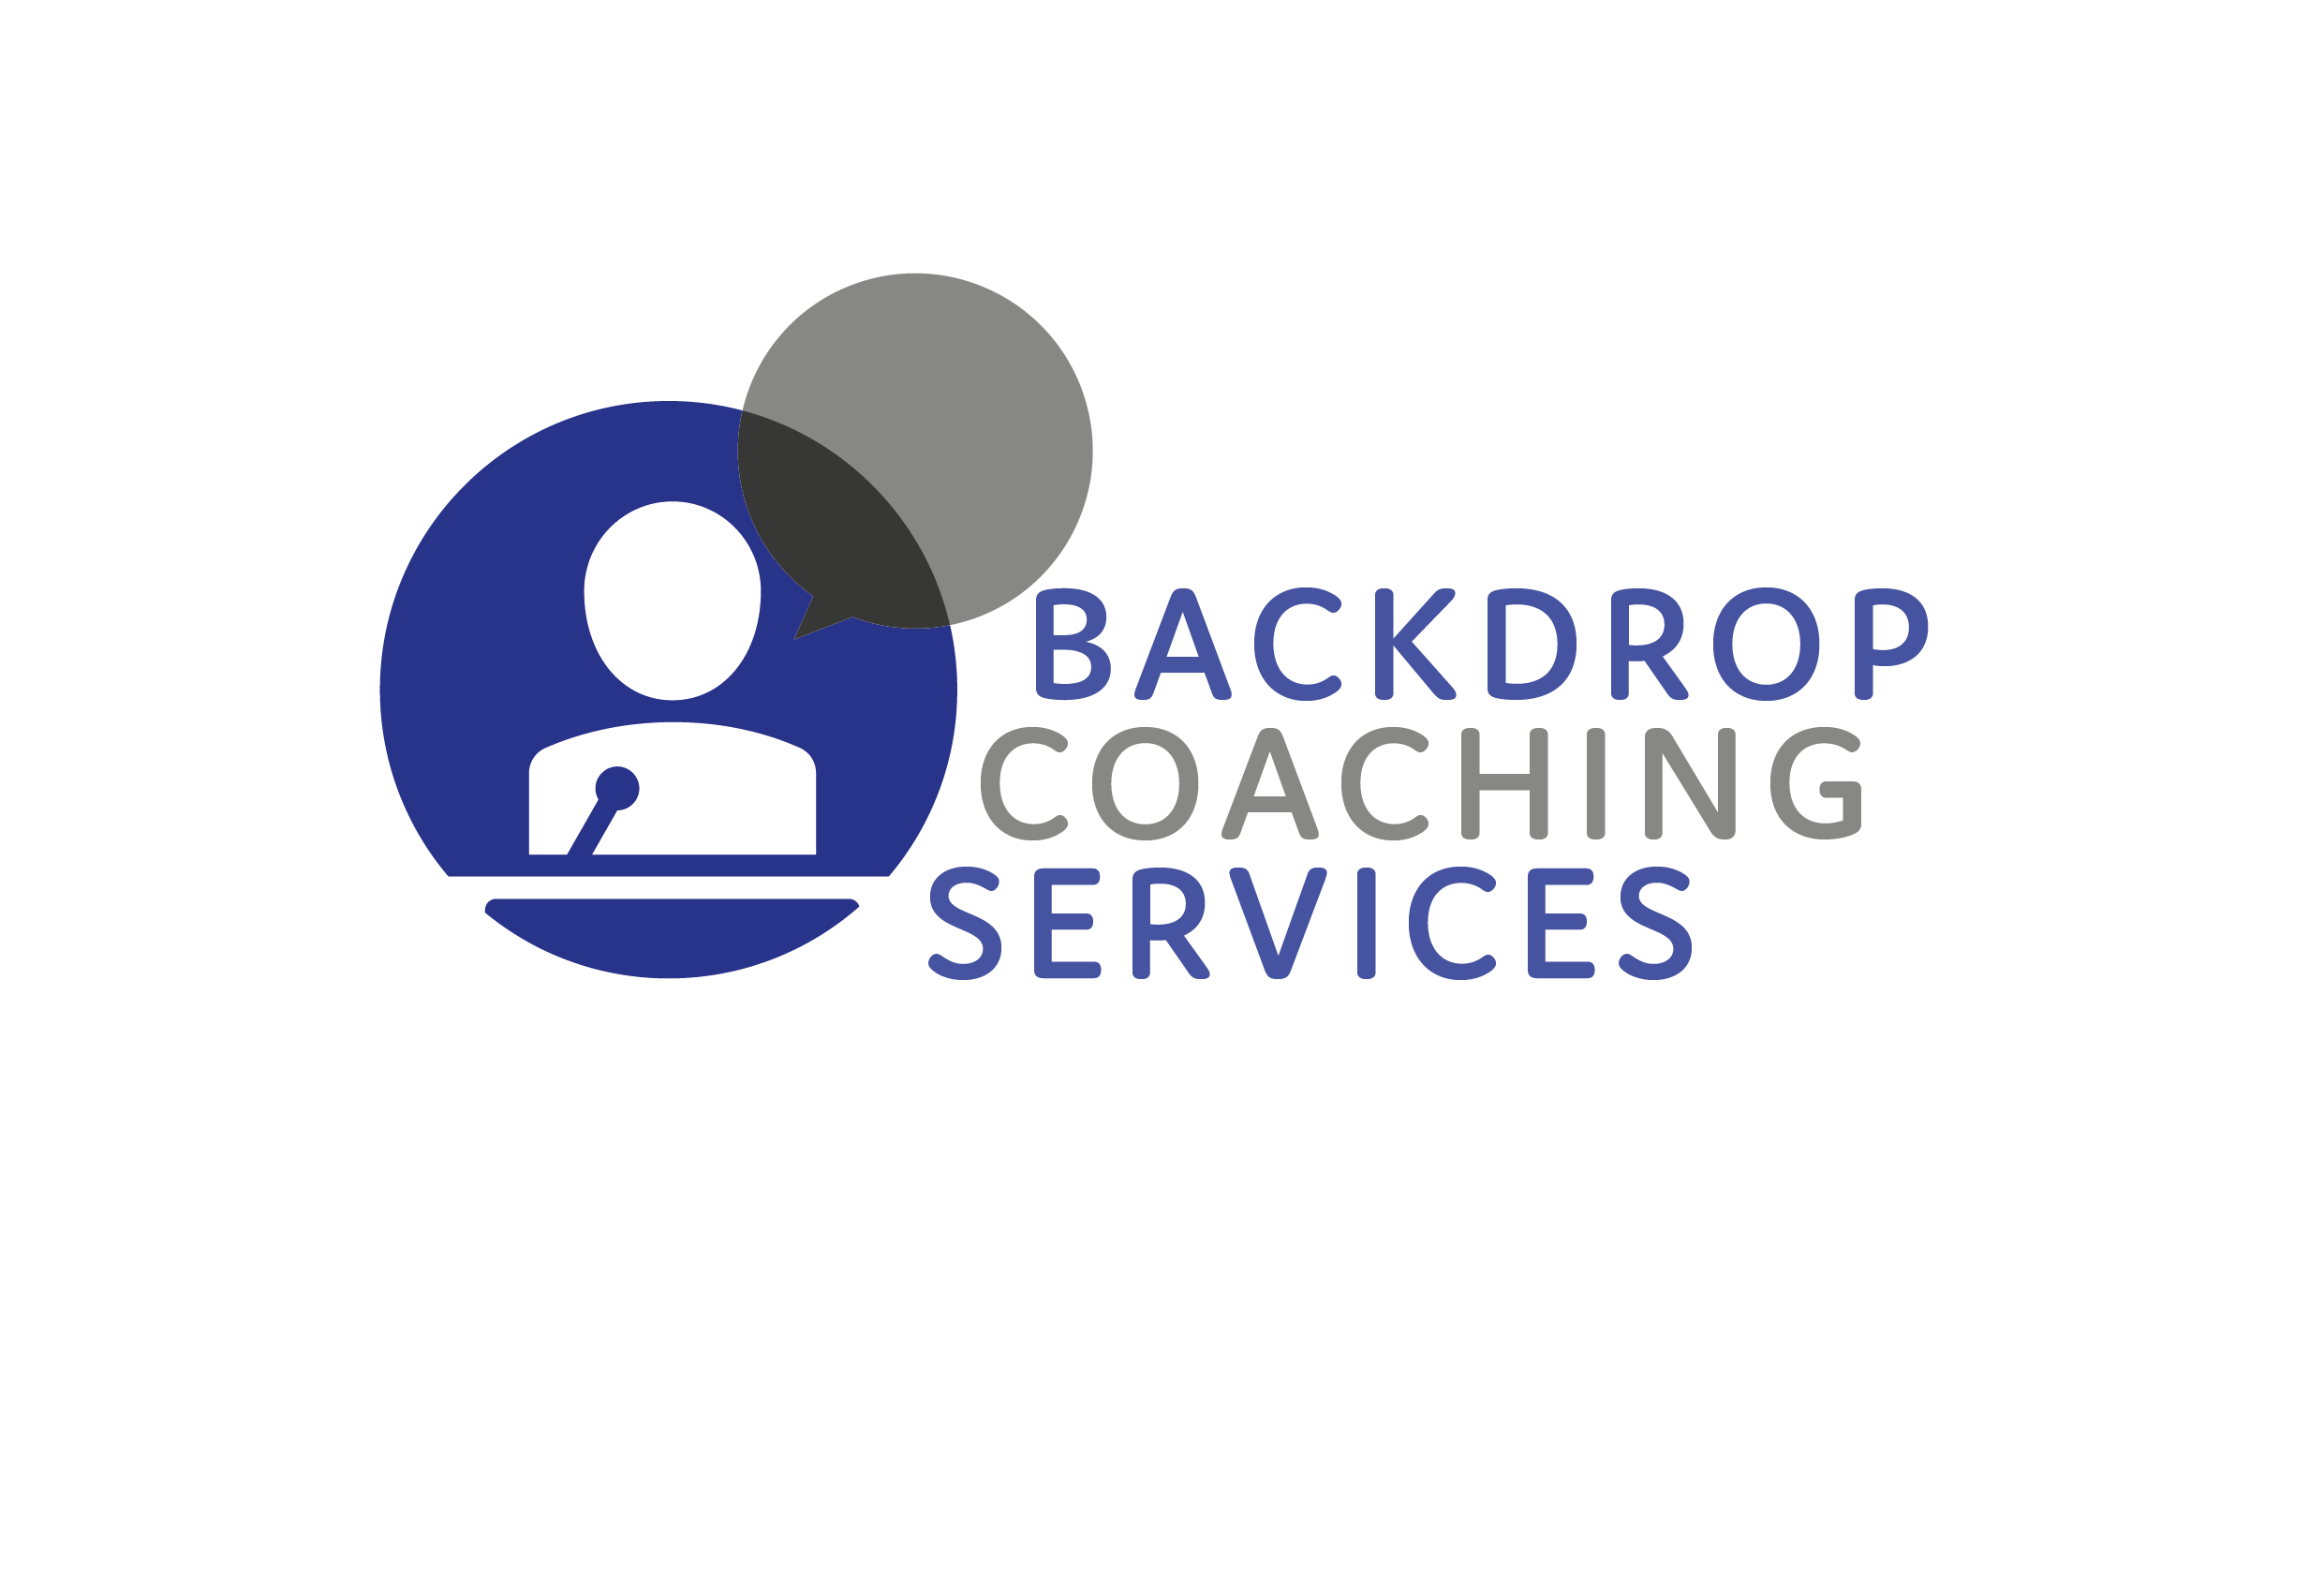 Backdrop Coaching Services logo